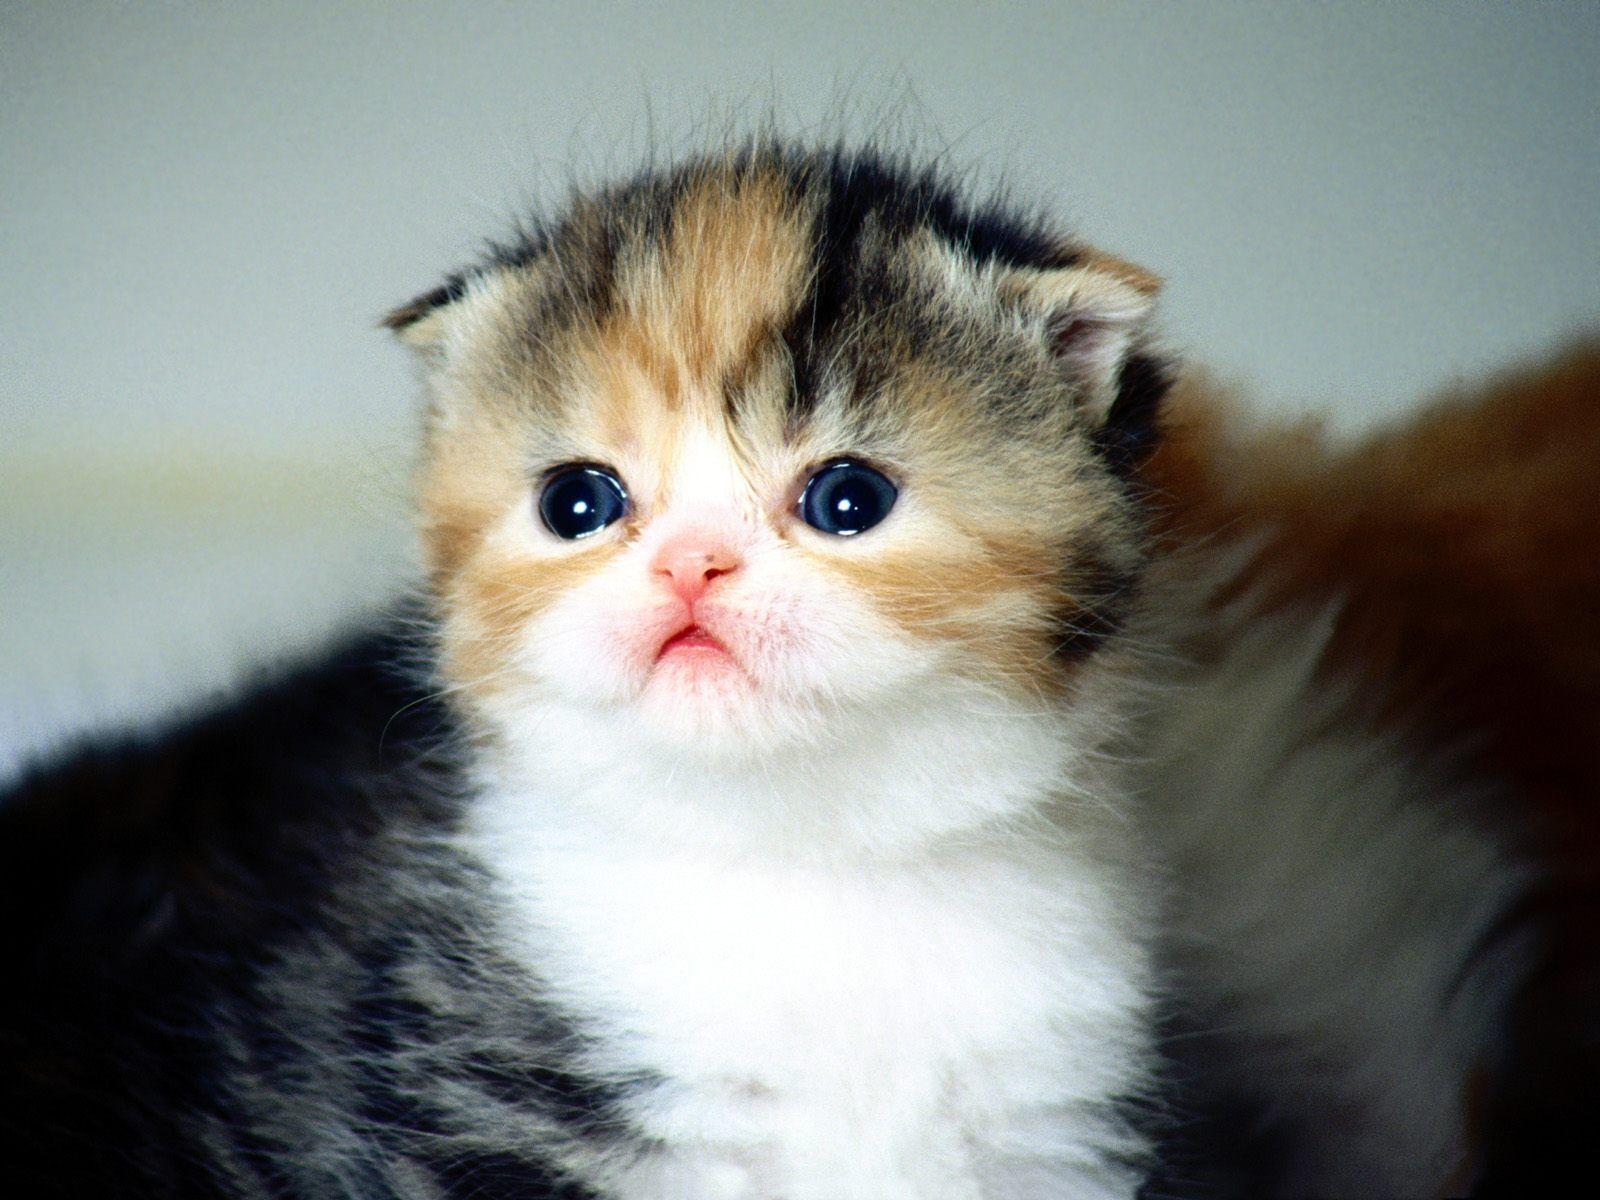 cutest baby kitten in the world